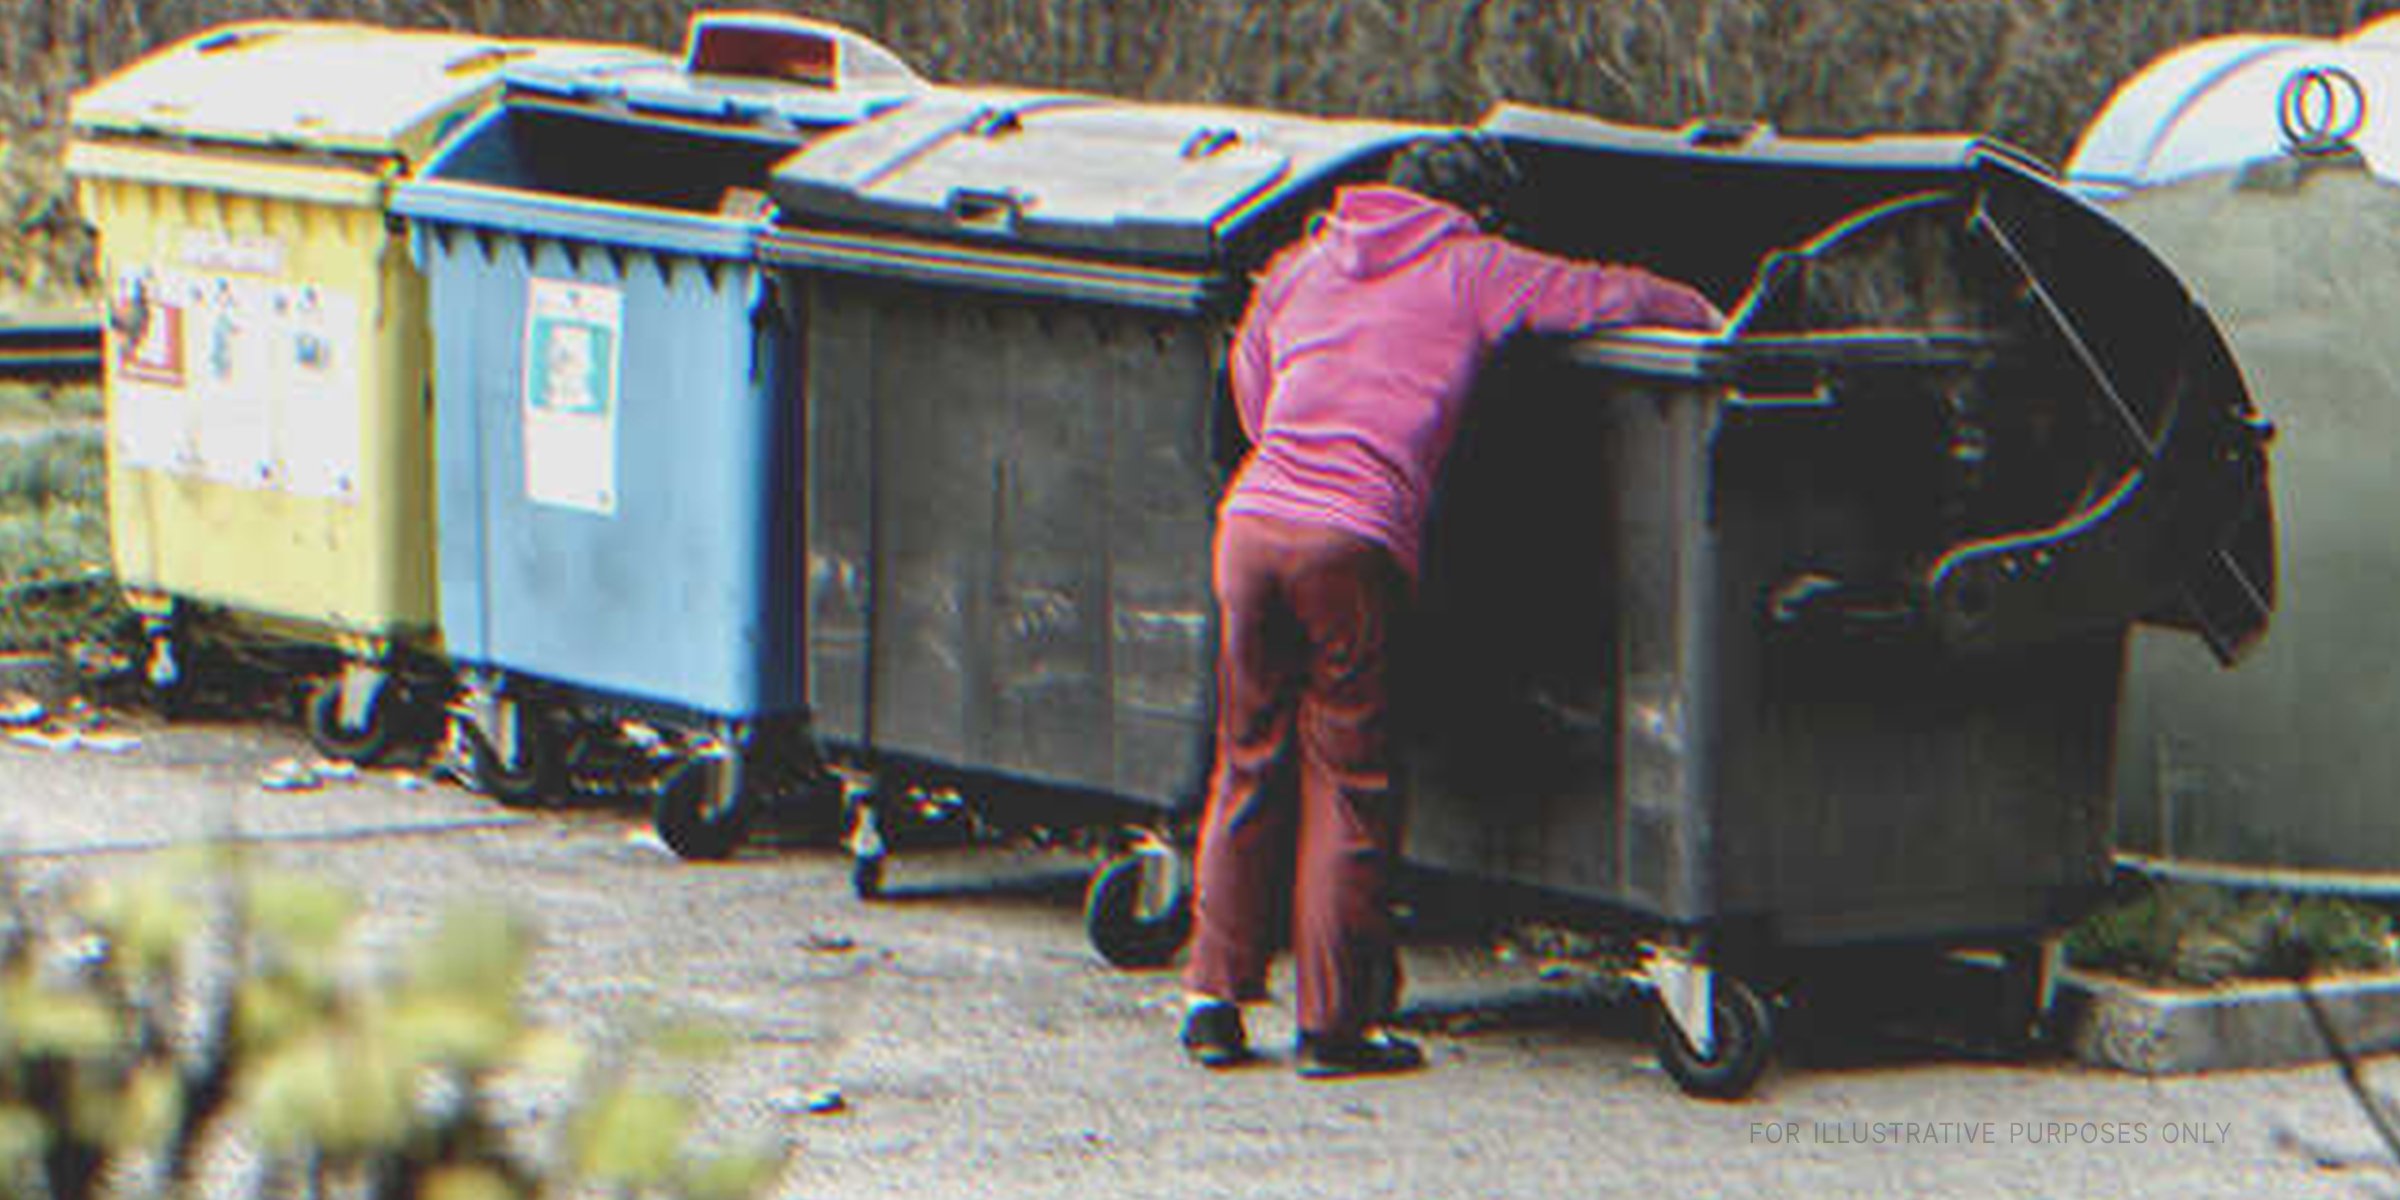 Woman rummaging through garbage | Source: Shutterstock